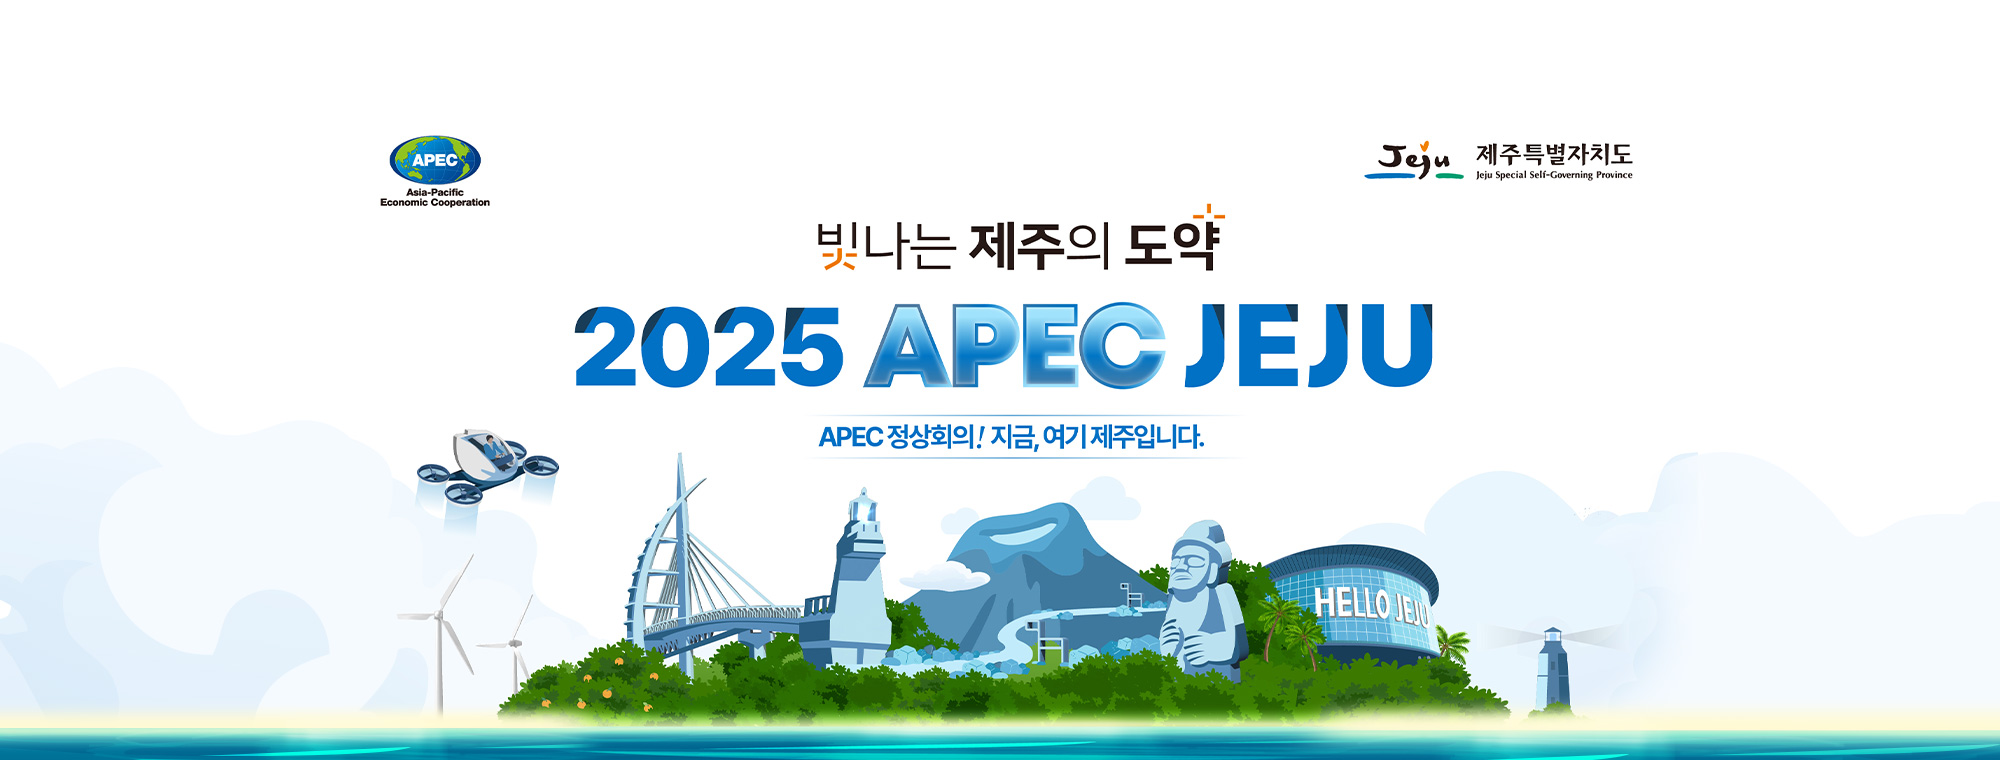 APEC. 제주특별자치도. 빛나는 제주의 도약. 2025 APEC JEJU. APEC 정상회의! 지금, 여기 제주입니다.